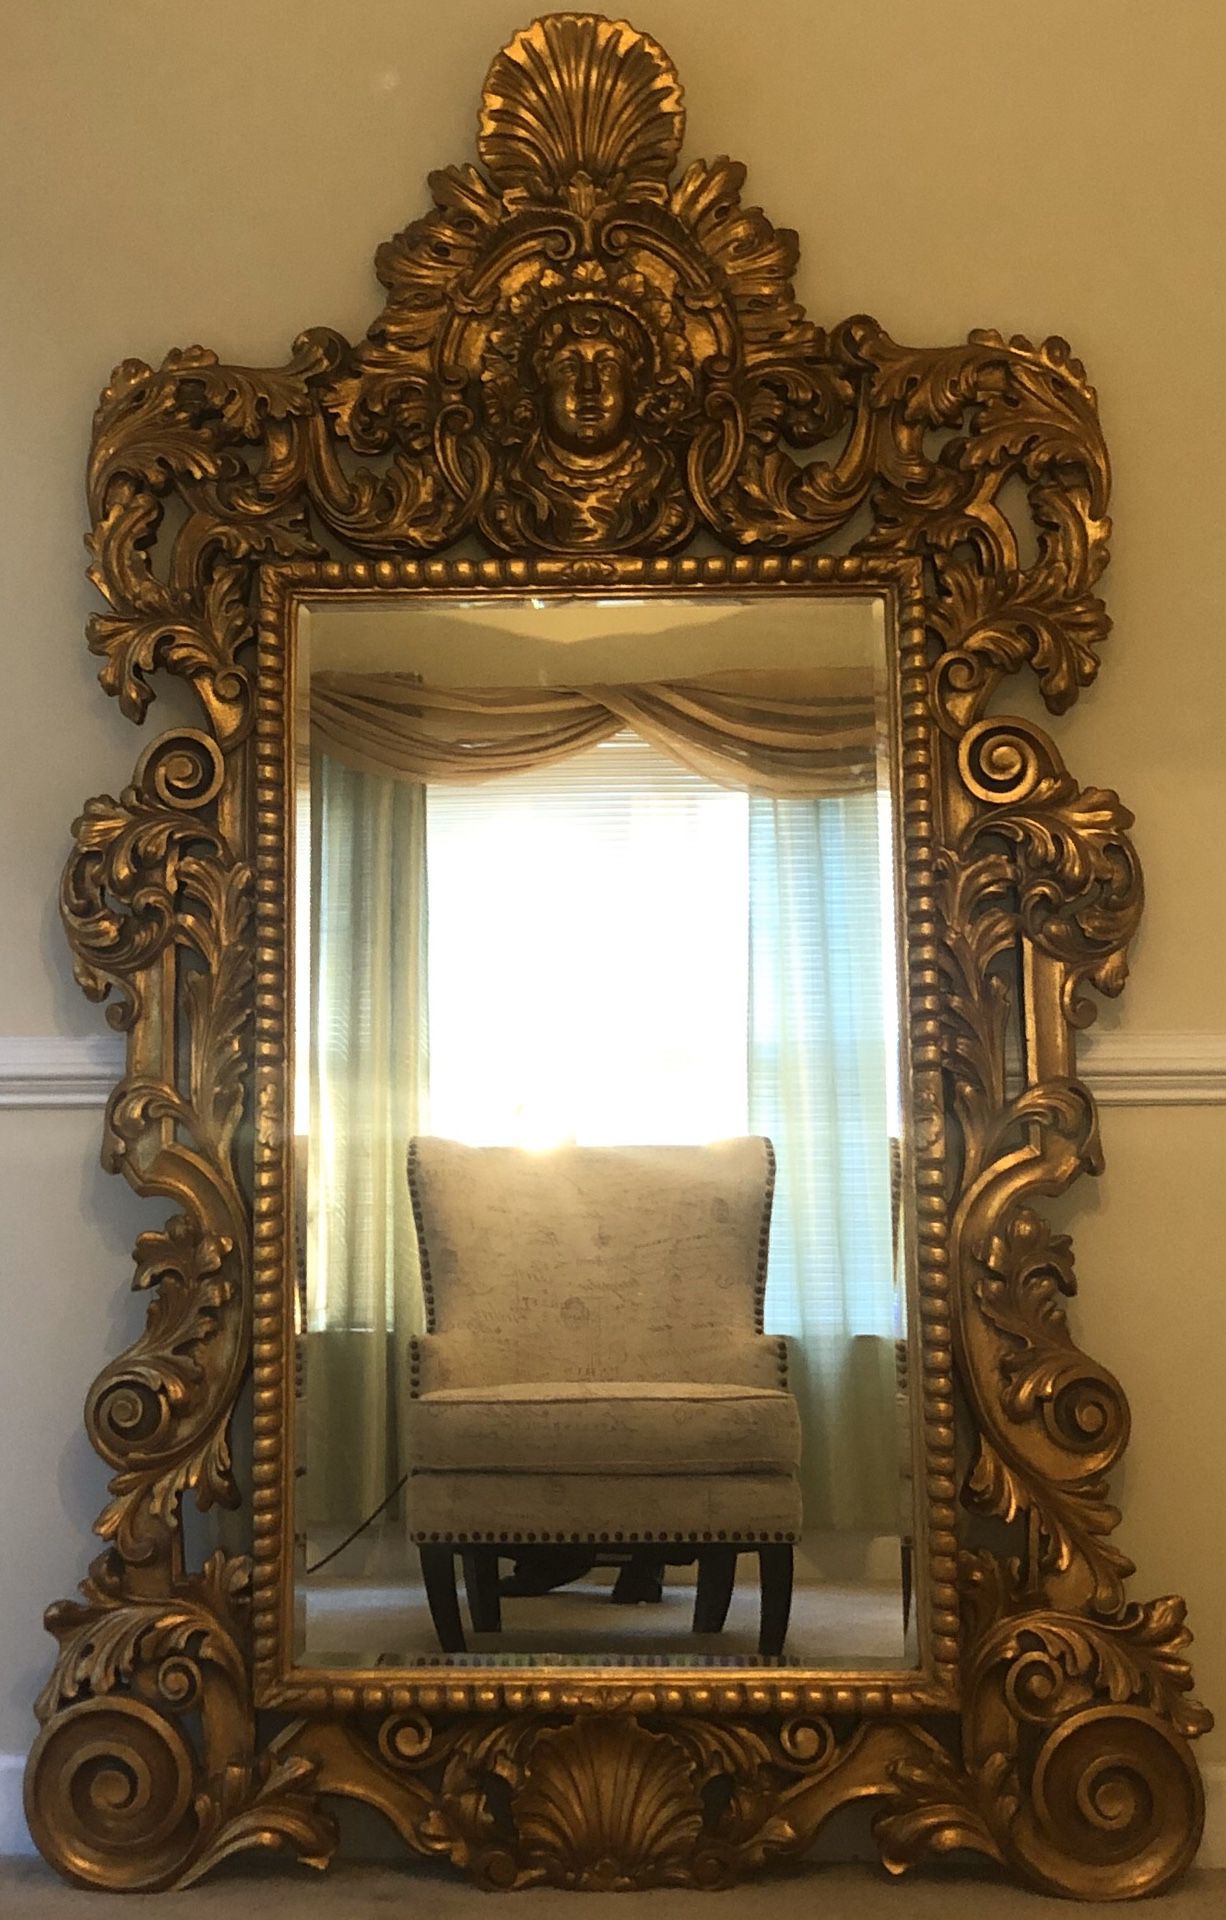 Golden Face Wall Mirror (Windsor Art) Real wood frame!